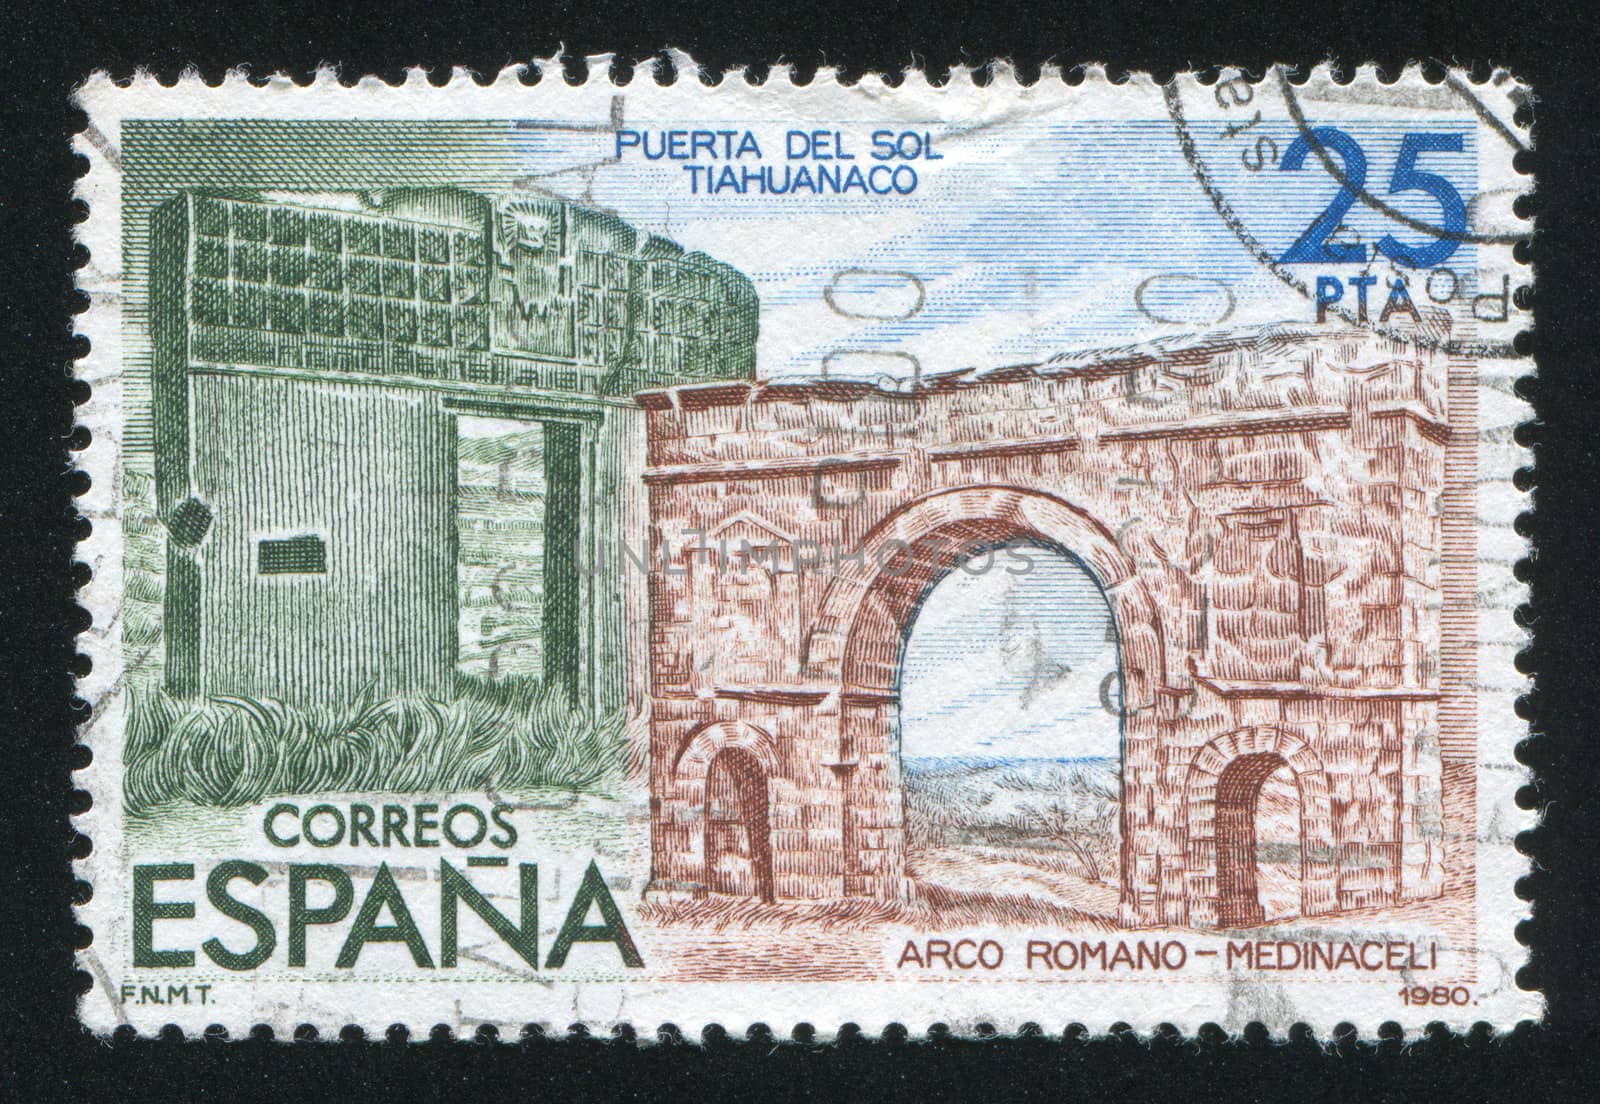 SPAIN - CIRCA 1980: stamp printed by Spain, shows Roman Arch in Medinaceli and Sun Gate in Tiahuanaco, circa 1980